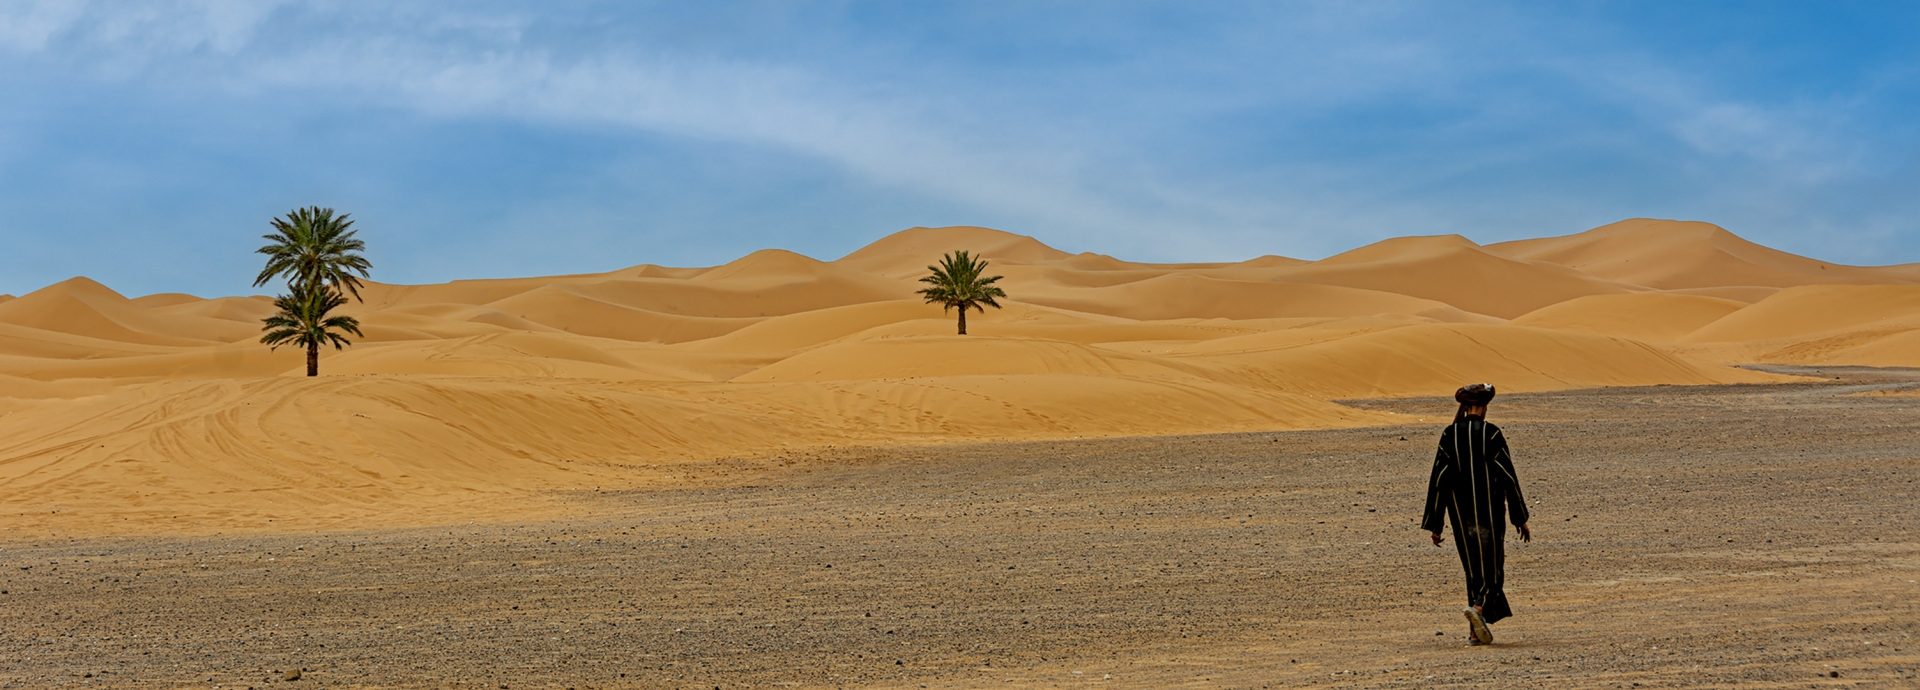 Caminant pel Desert